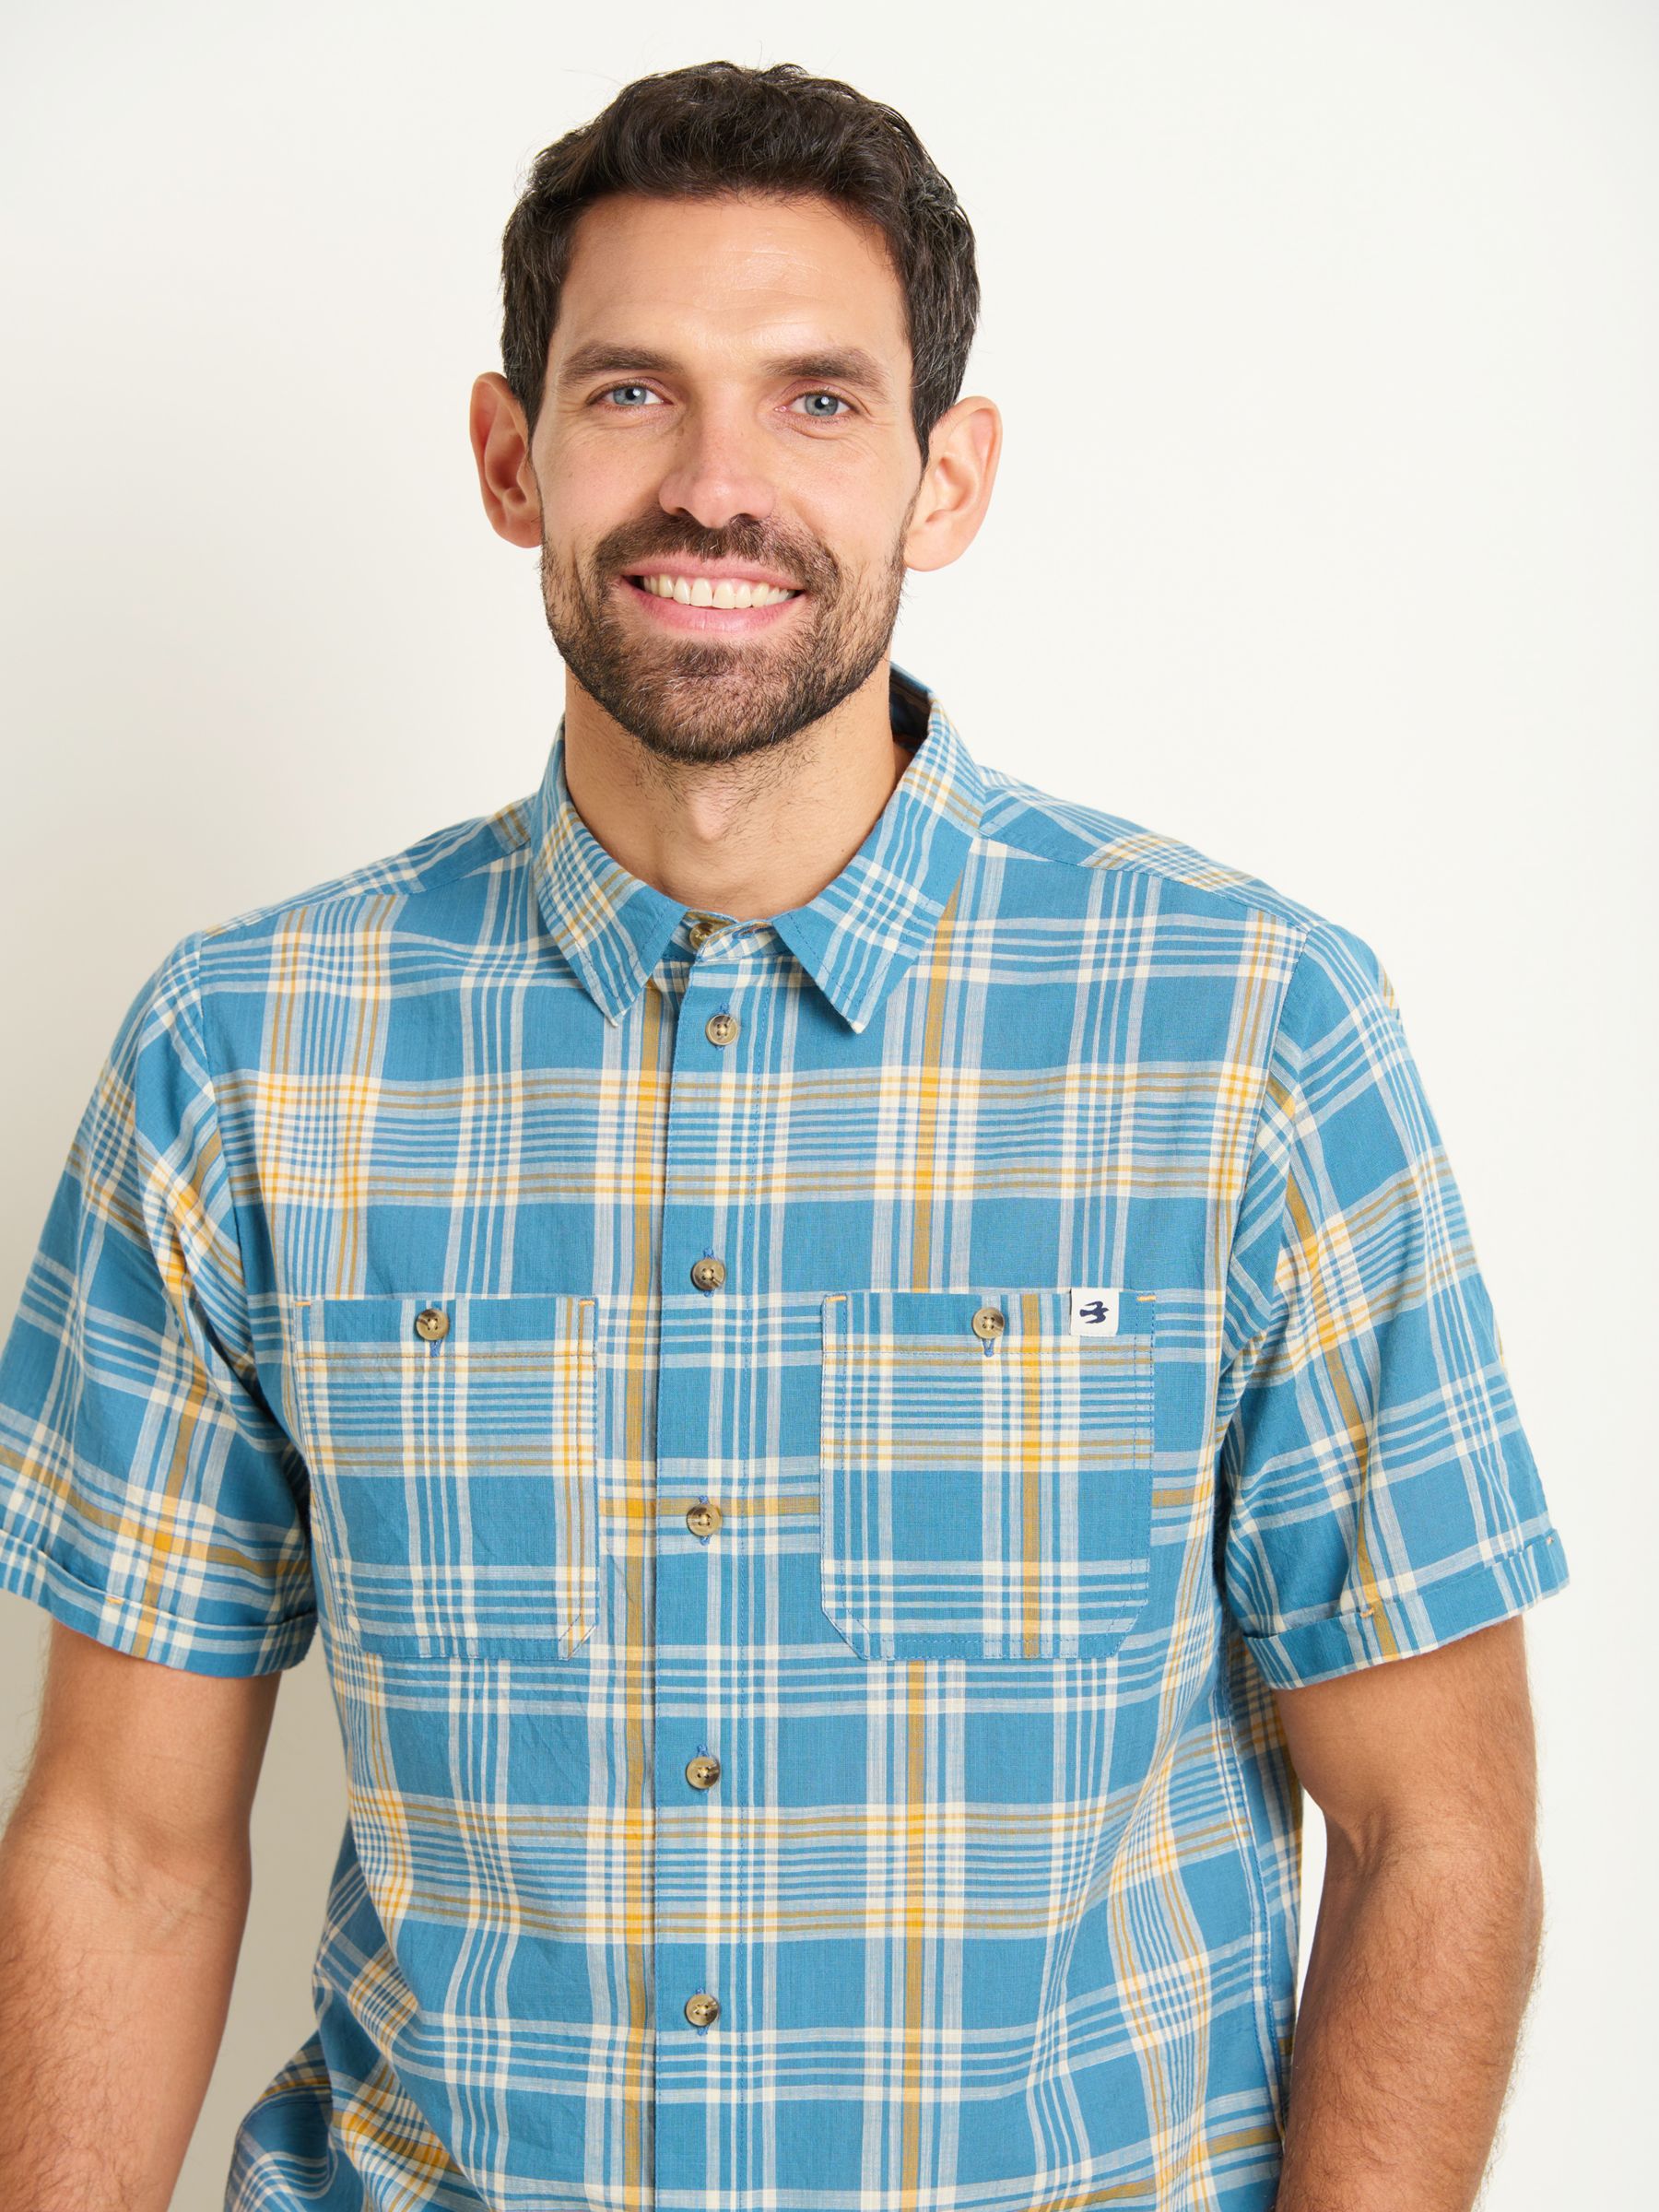 Buy Brakeburn Check Cotton Short Sleeve Shirt, Blue/Yellow Online at johnlewis.com